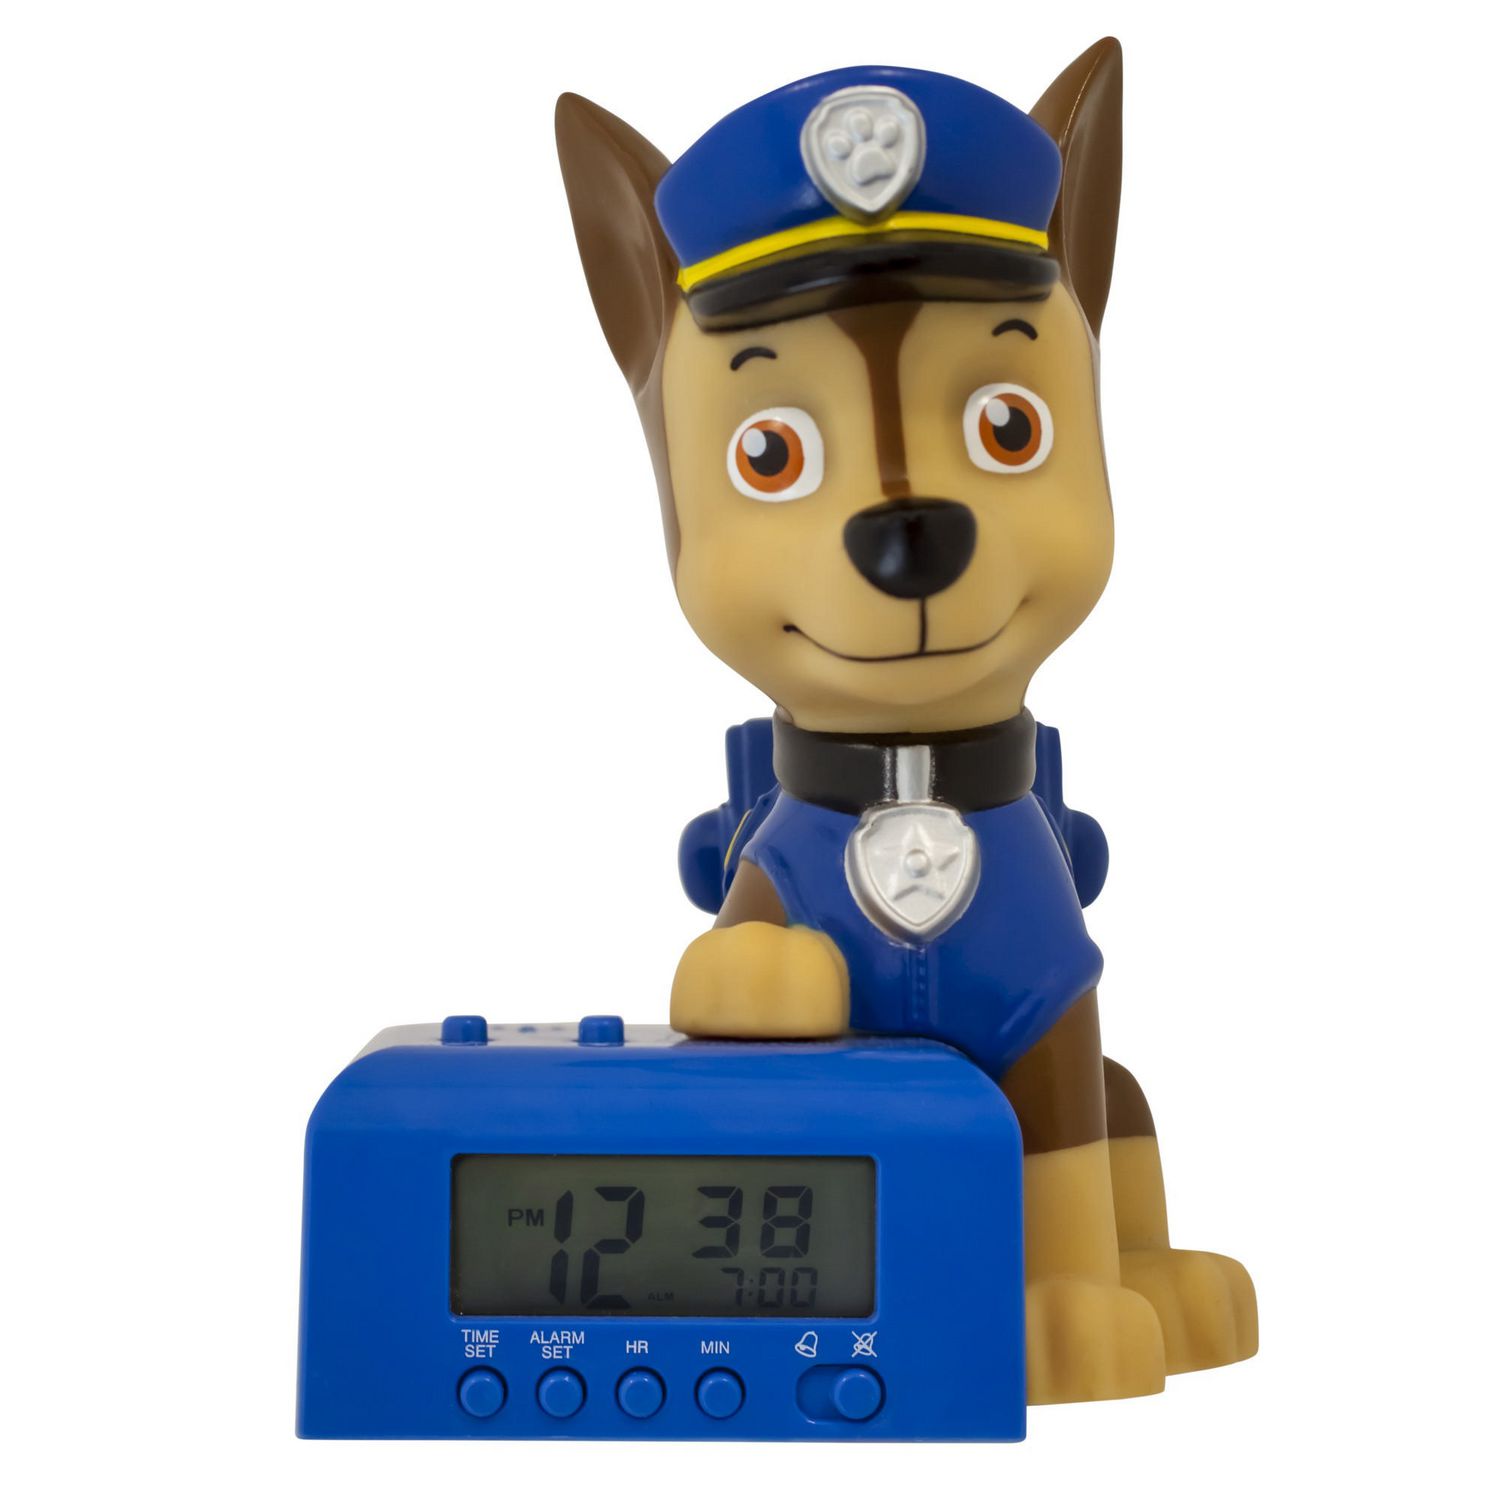 PAW Patrol Alarm Desk Clock 3.75" Room Decor E45 Nice for Gifts wake up 